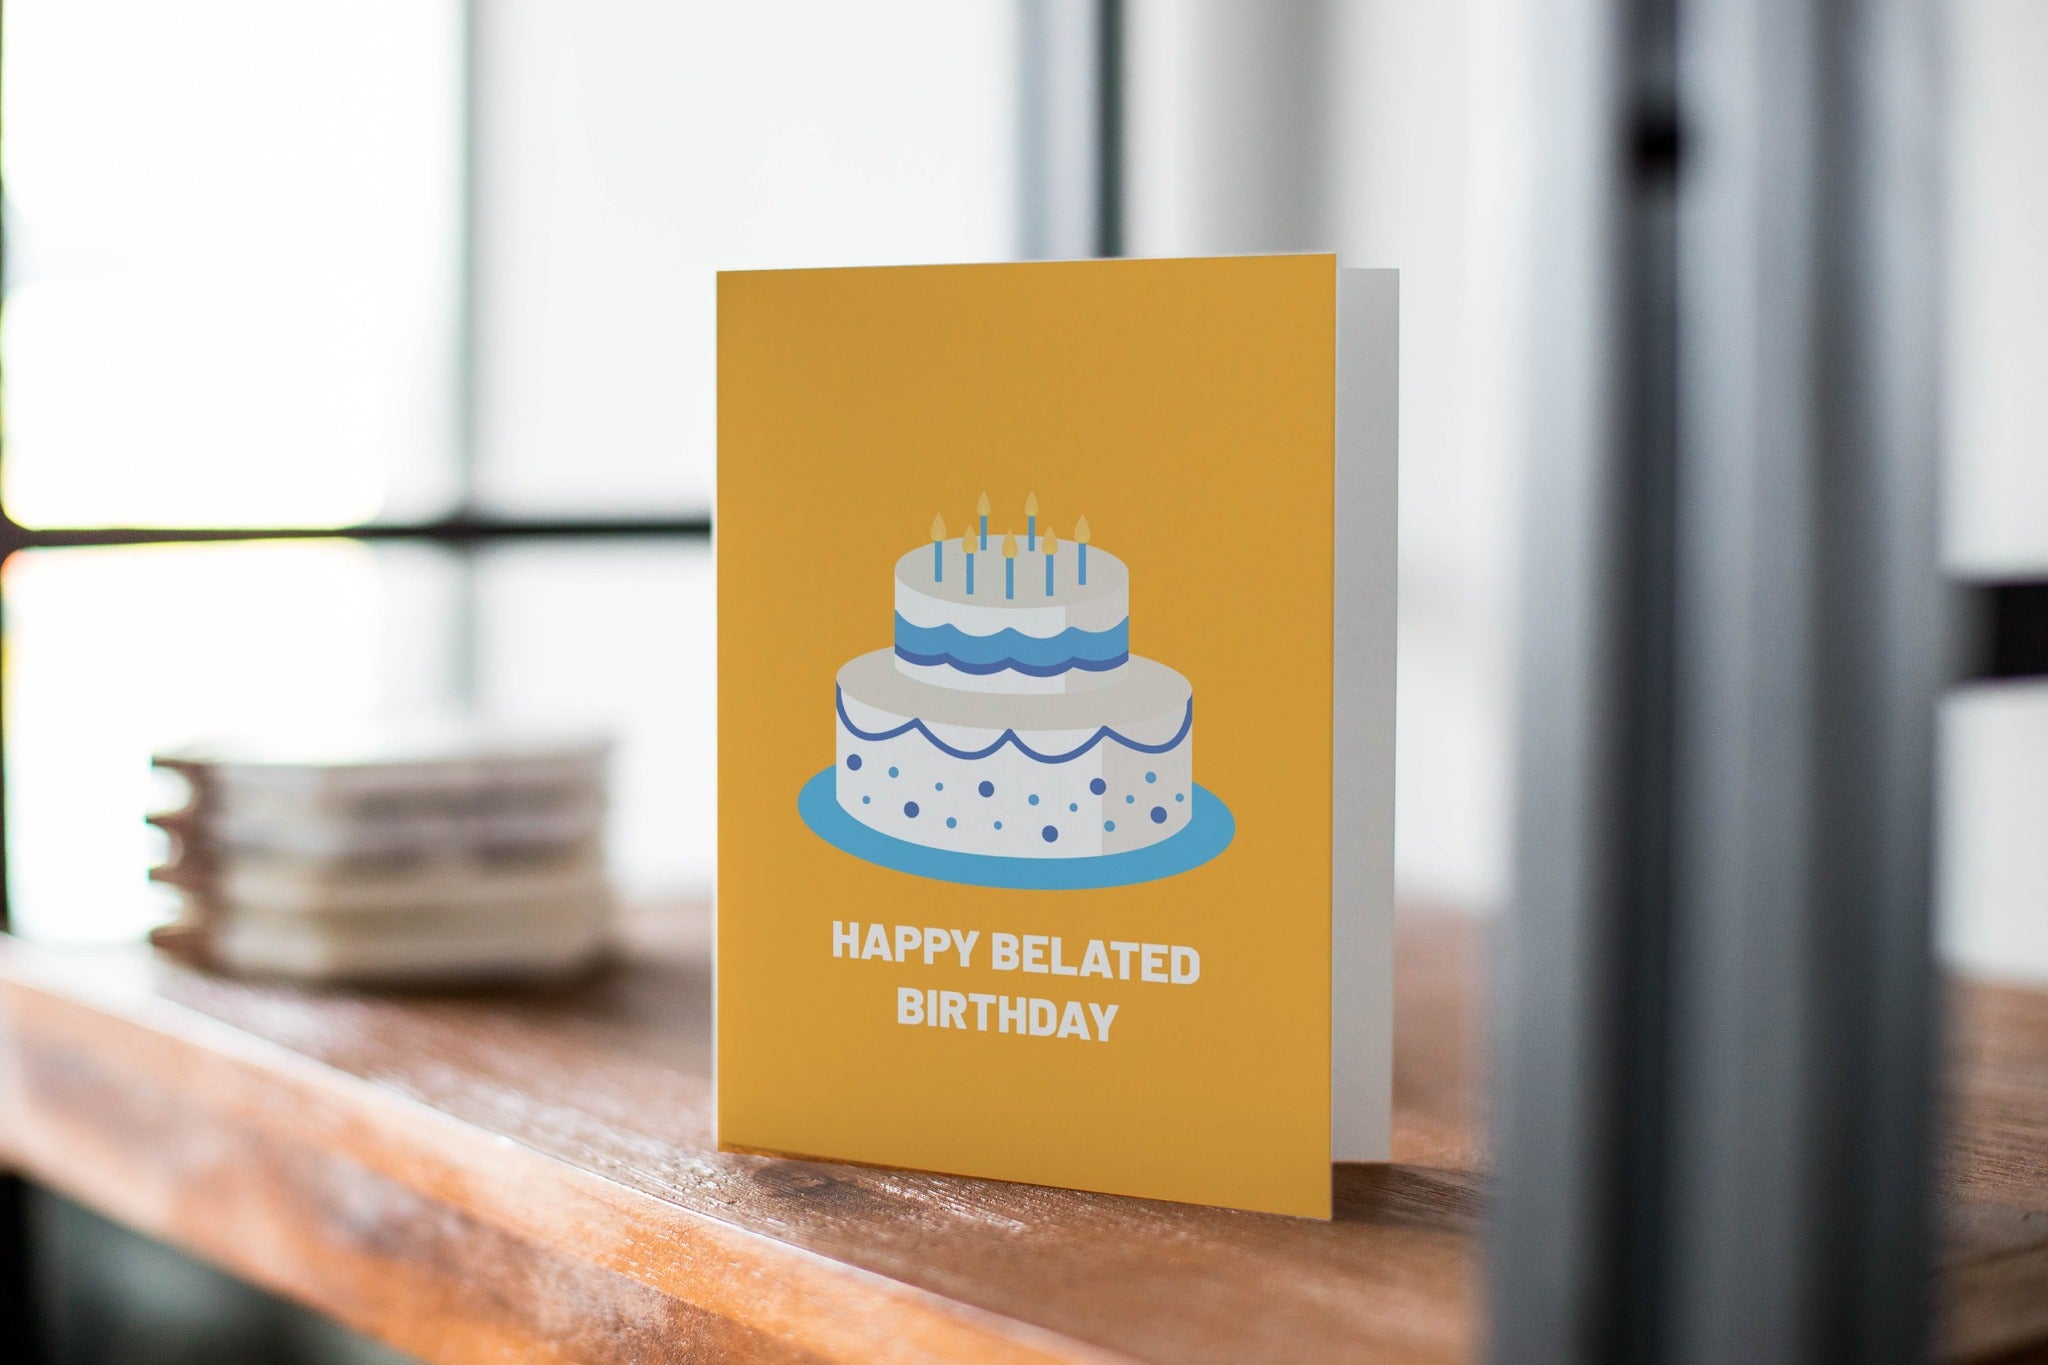 belated birthday wishes - Free Large Images | Happy birthday cake images,  Belated birthday wishes, Happy birthday cakes